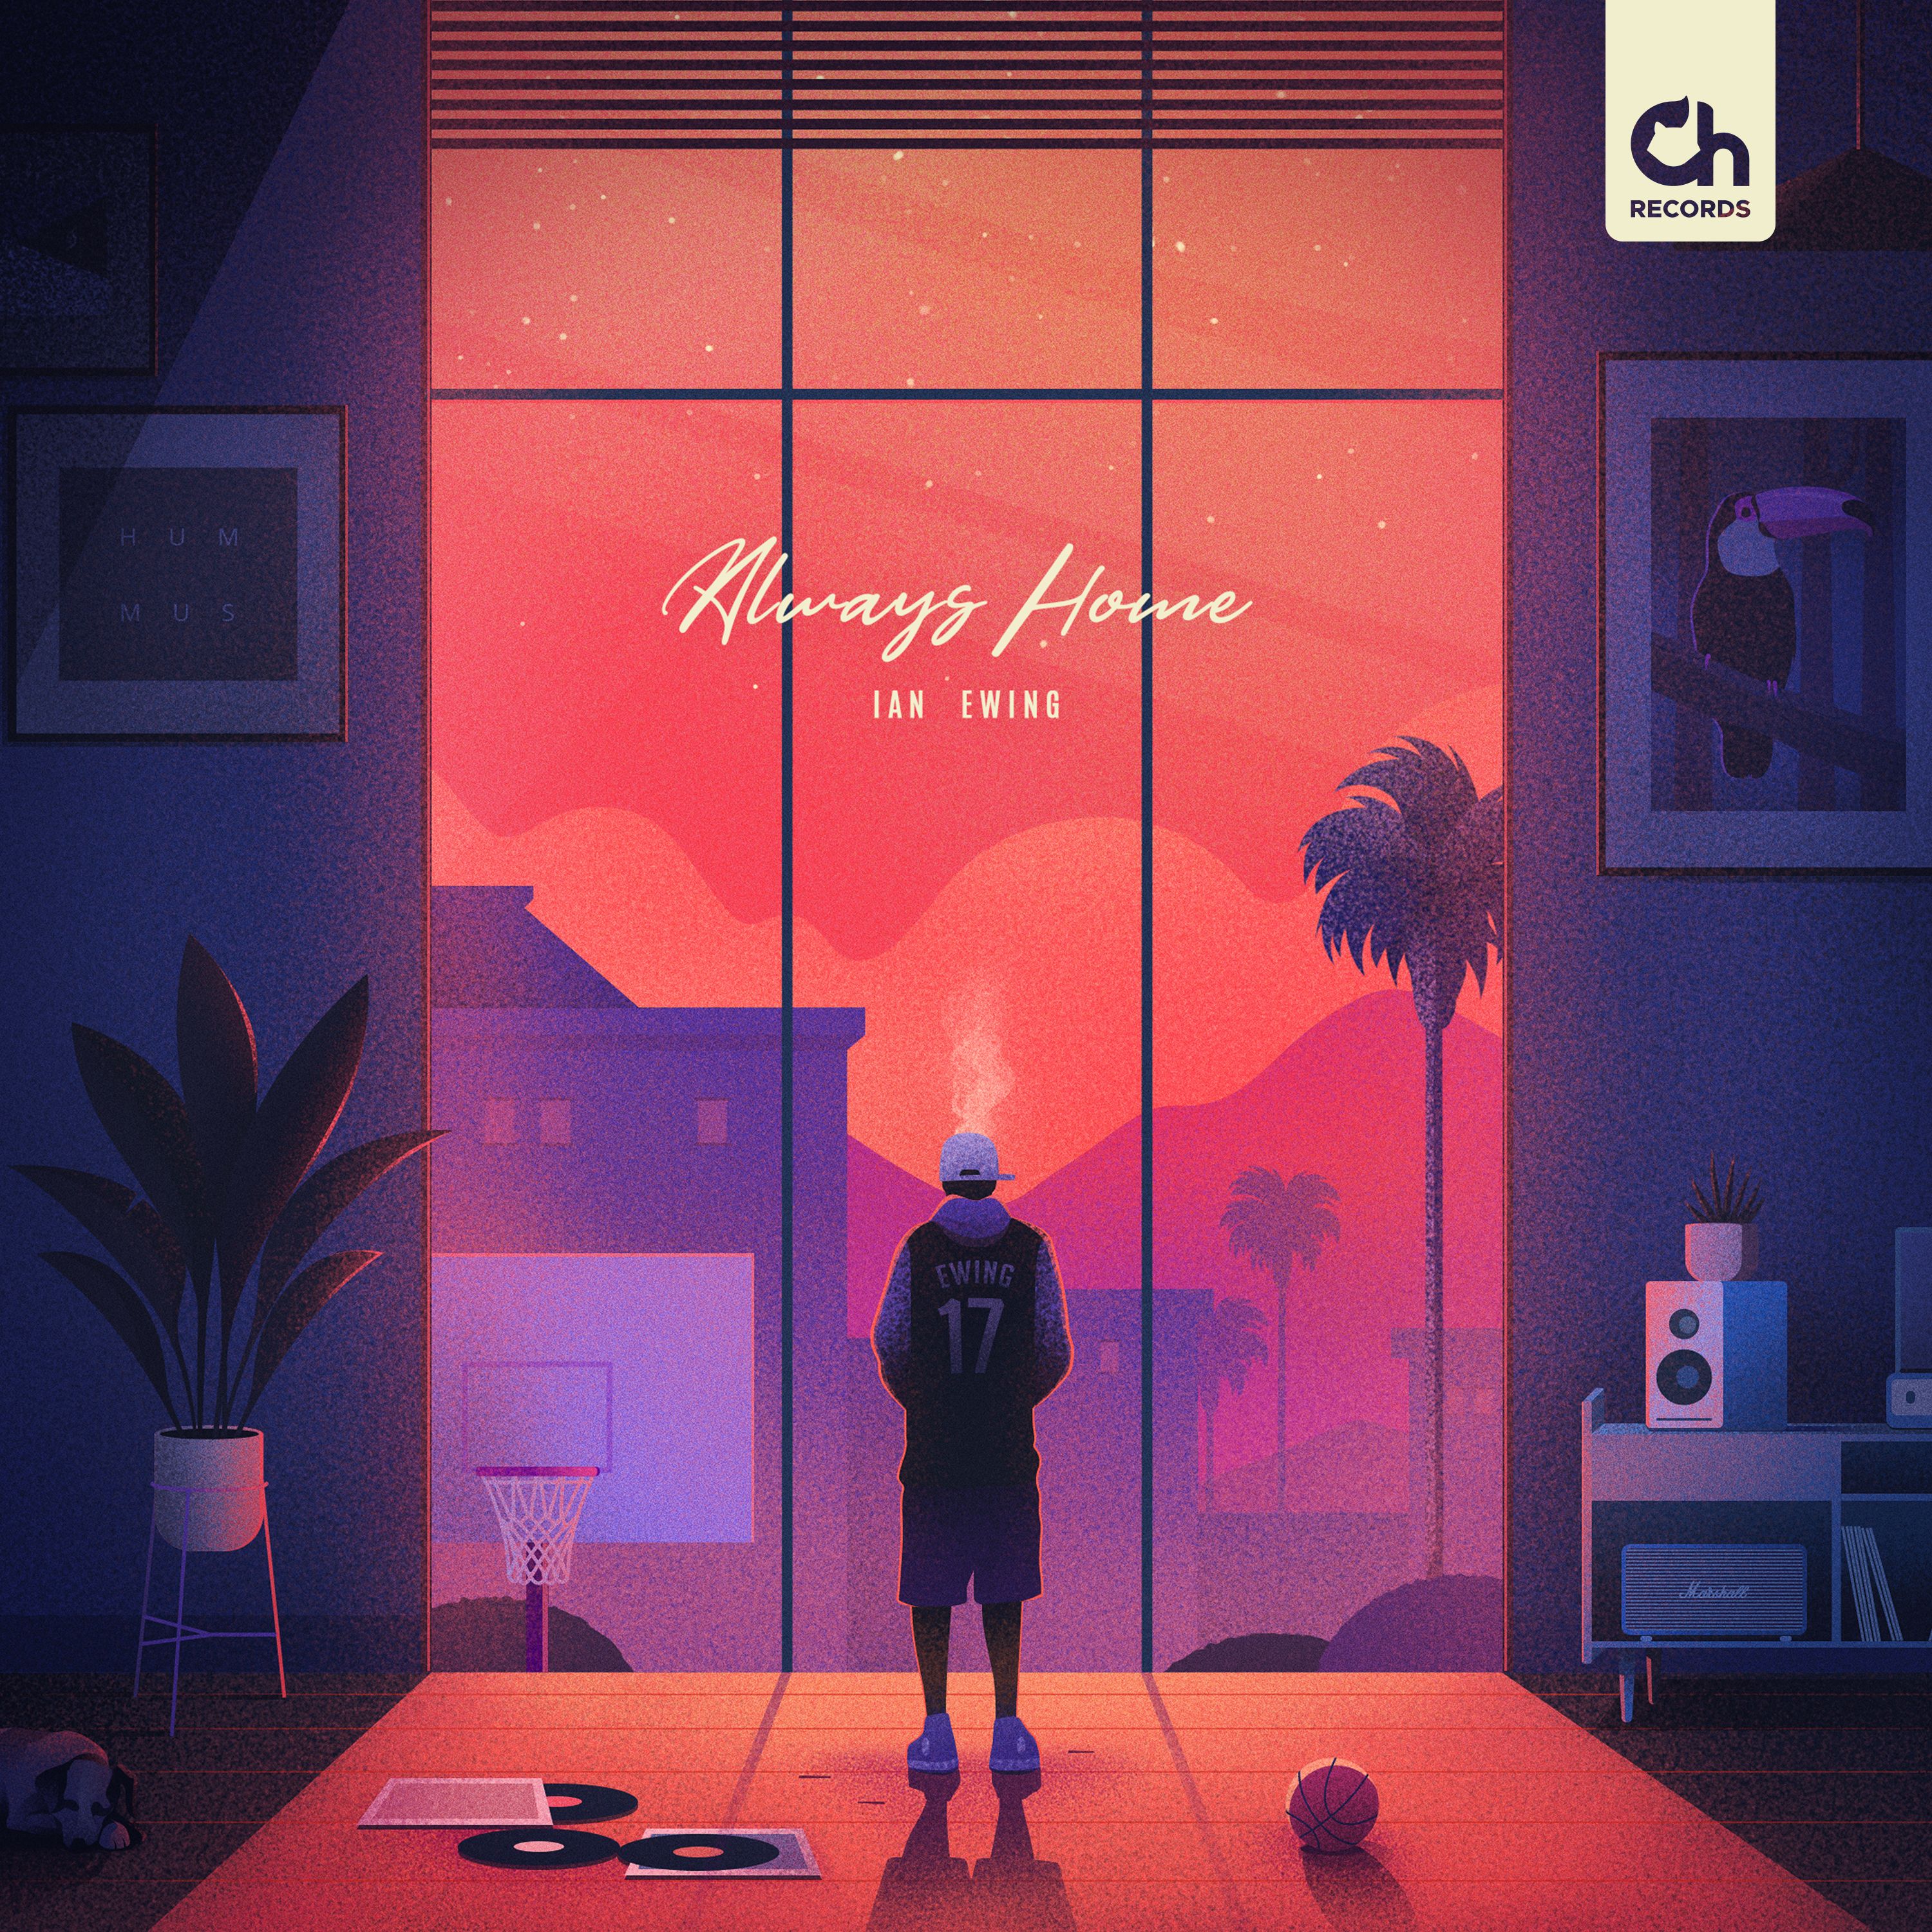 ڊائون لو Ian Ewing - 17 ["Always Home" EP out on 09.09]